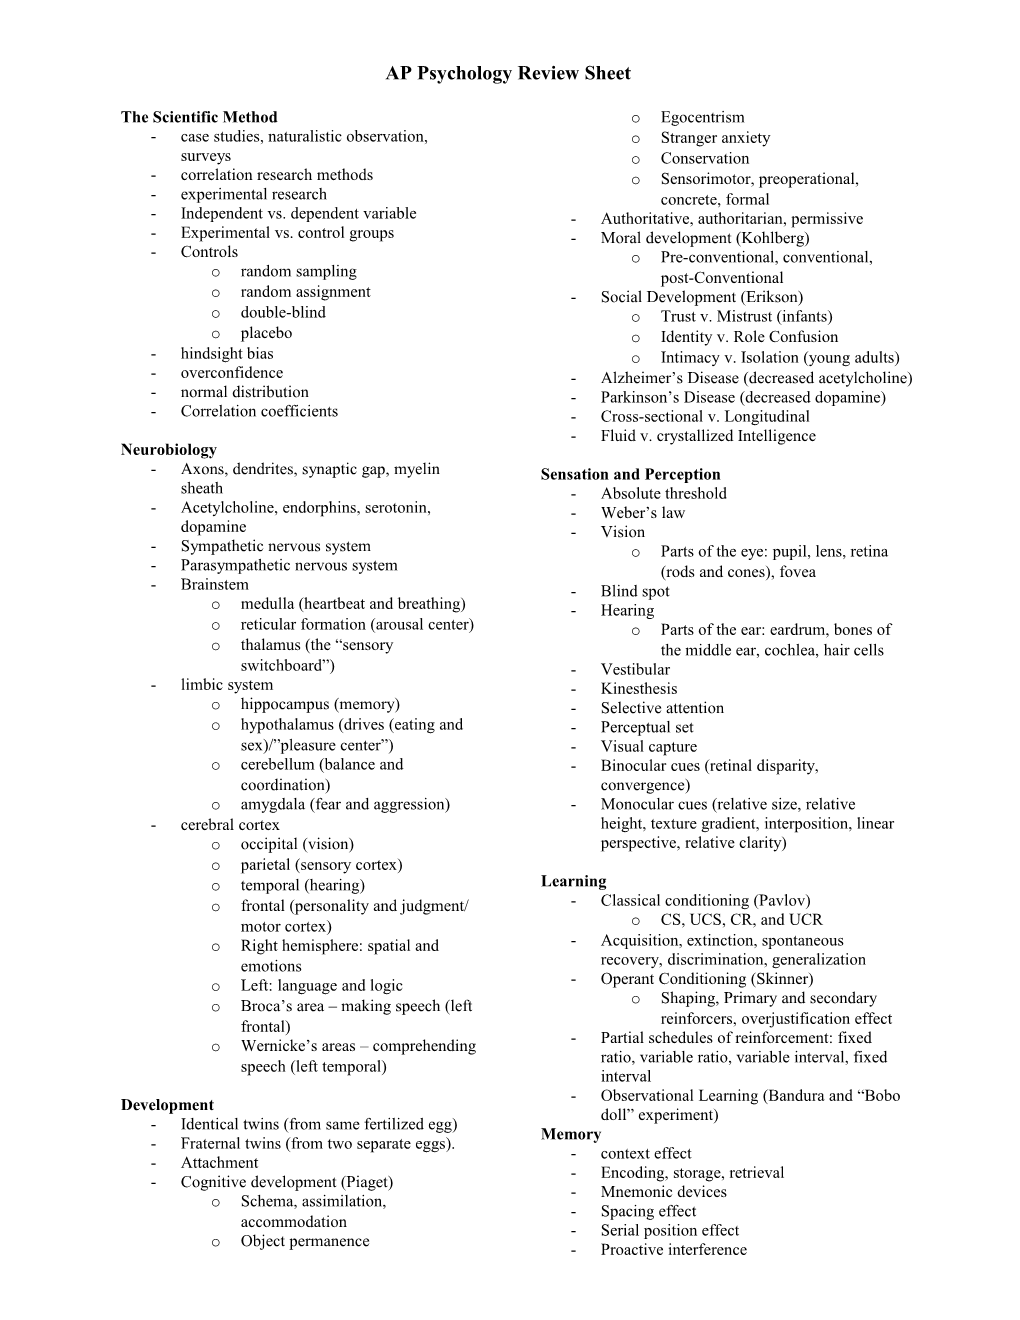 AP Psychologyreview Sheet